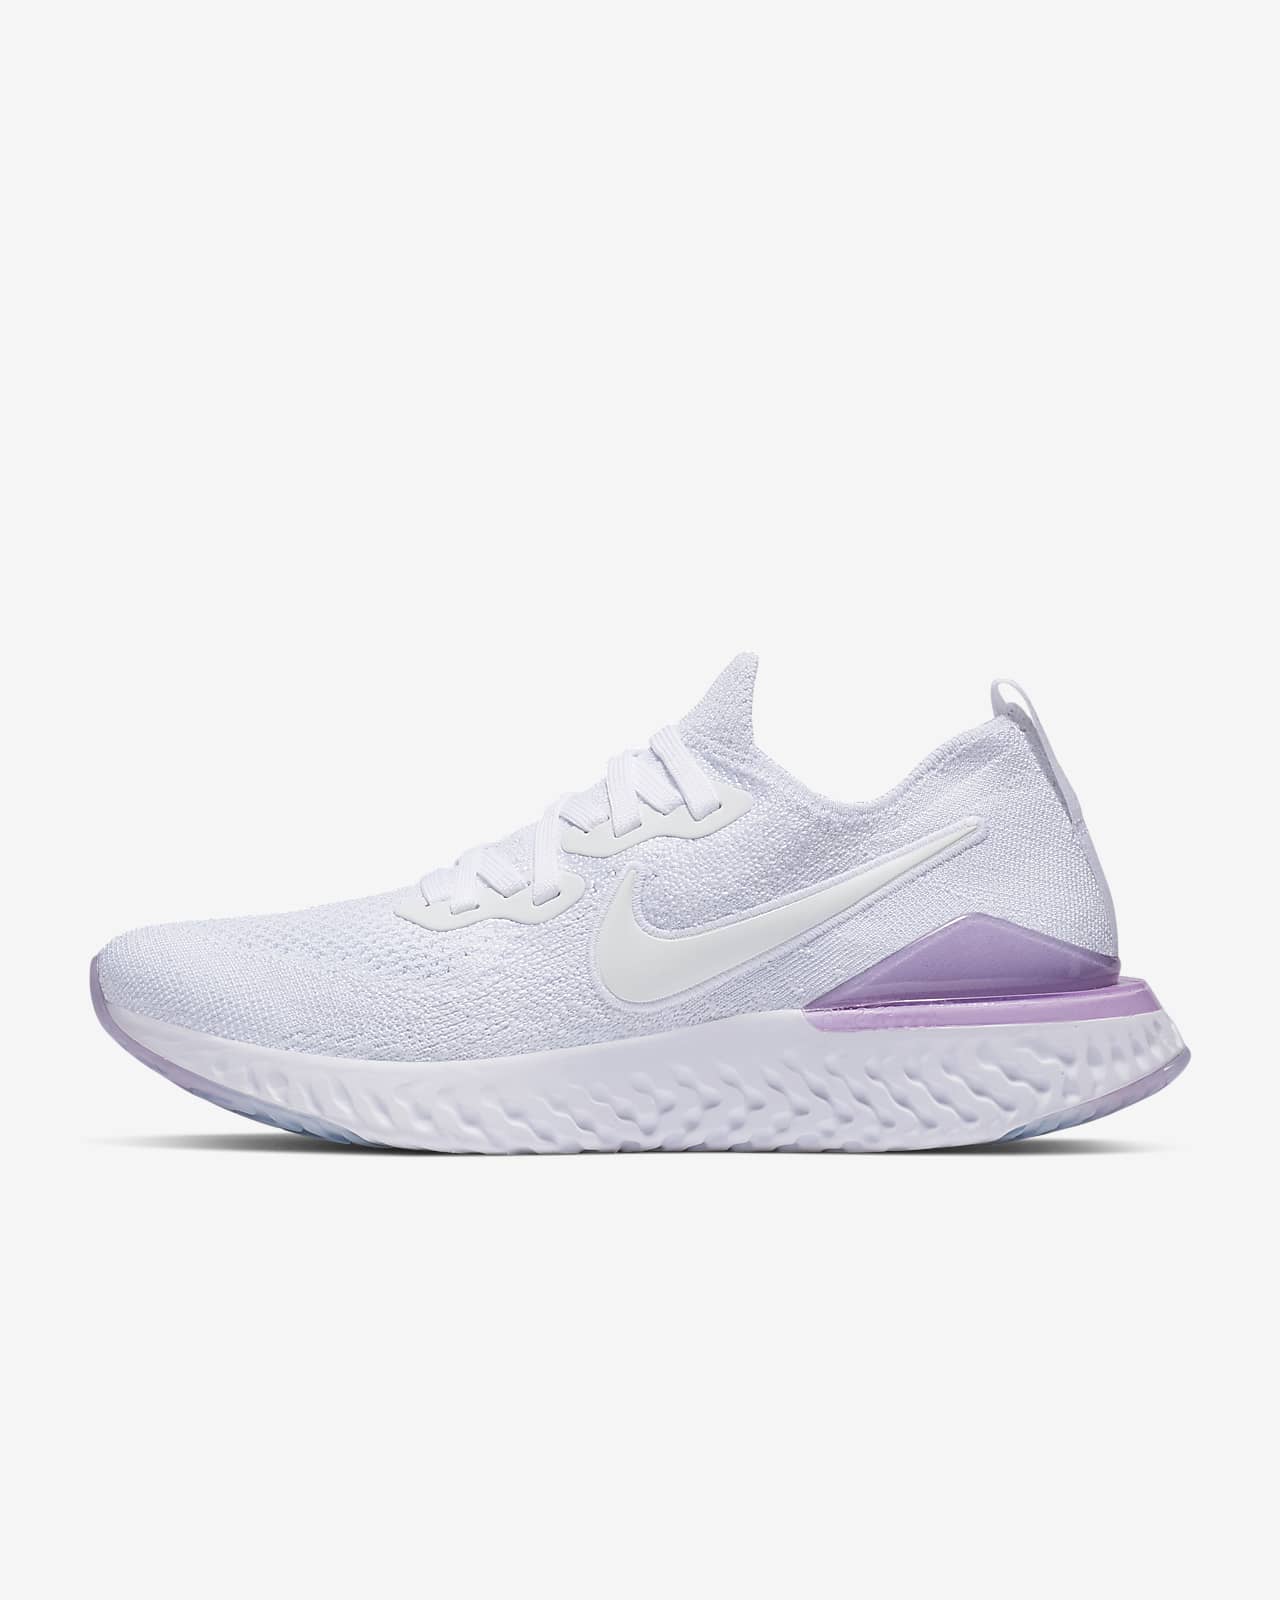 Women’s Nike Epic React Flyknit 2 ‘Pink Foam’ .97 Free Shipping